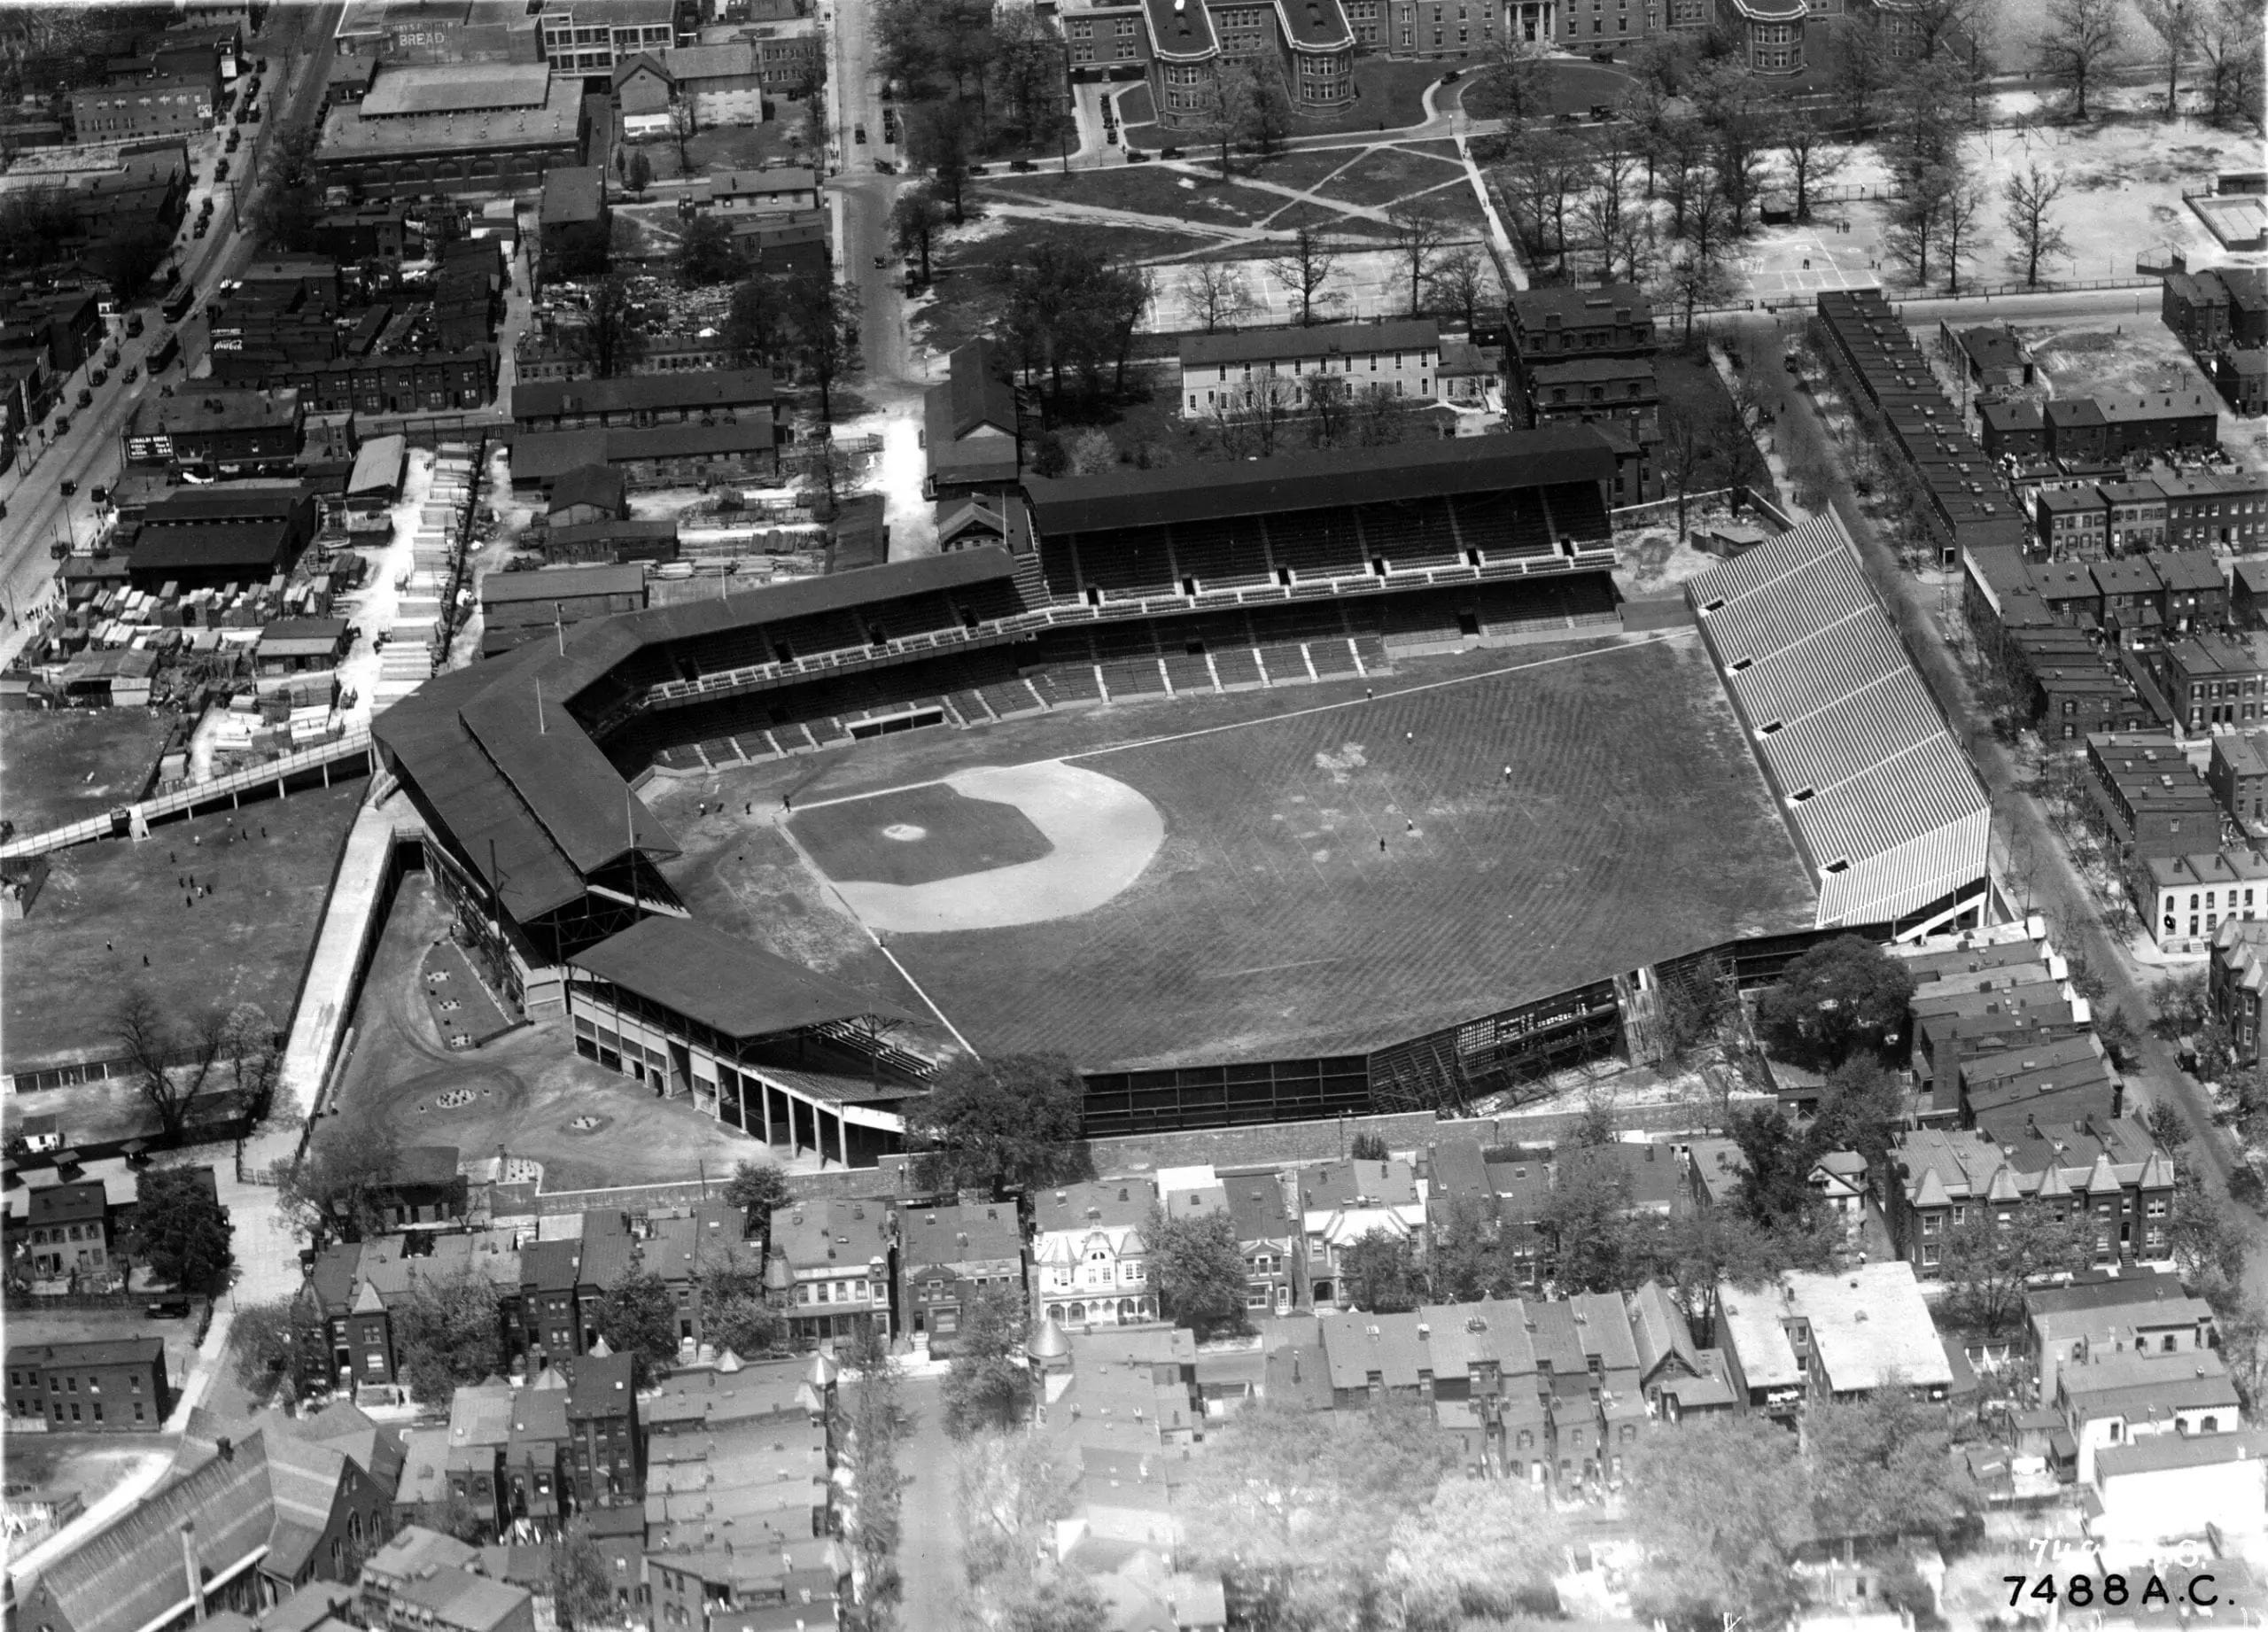 How The Negro League's Homestead Grays Shaped D.C. Baseball